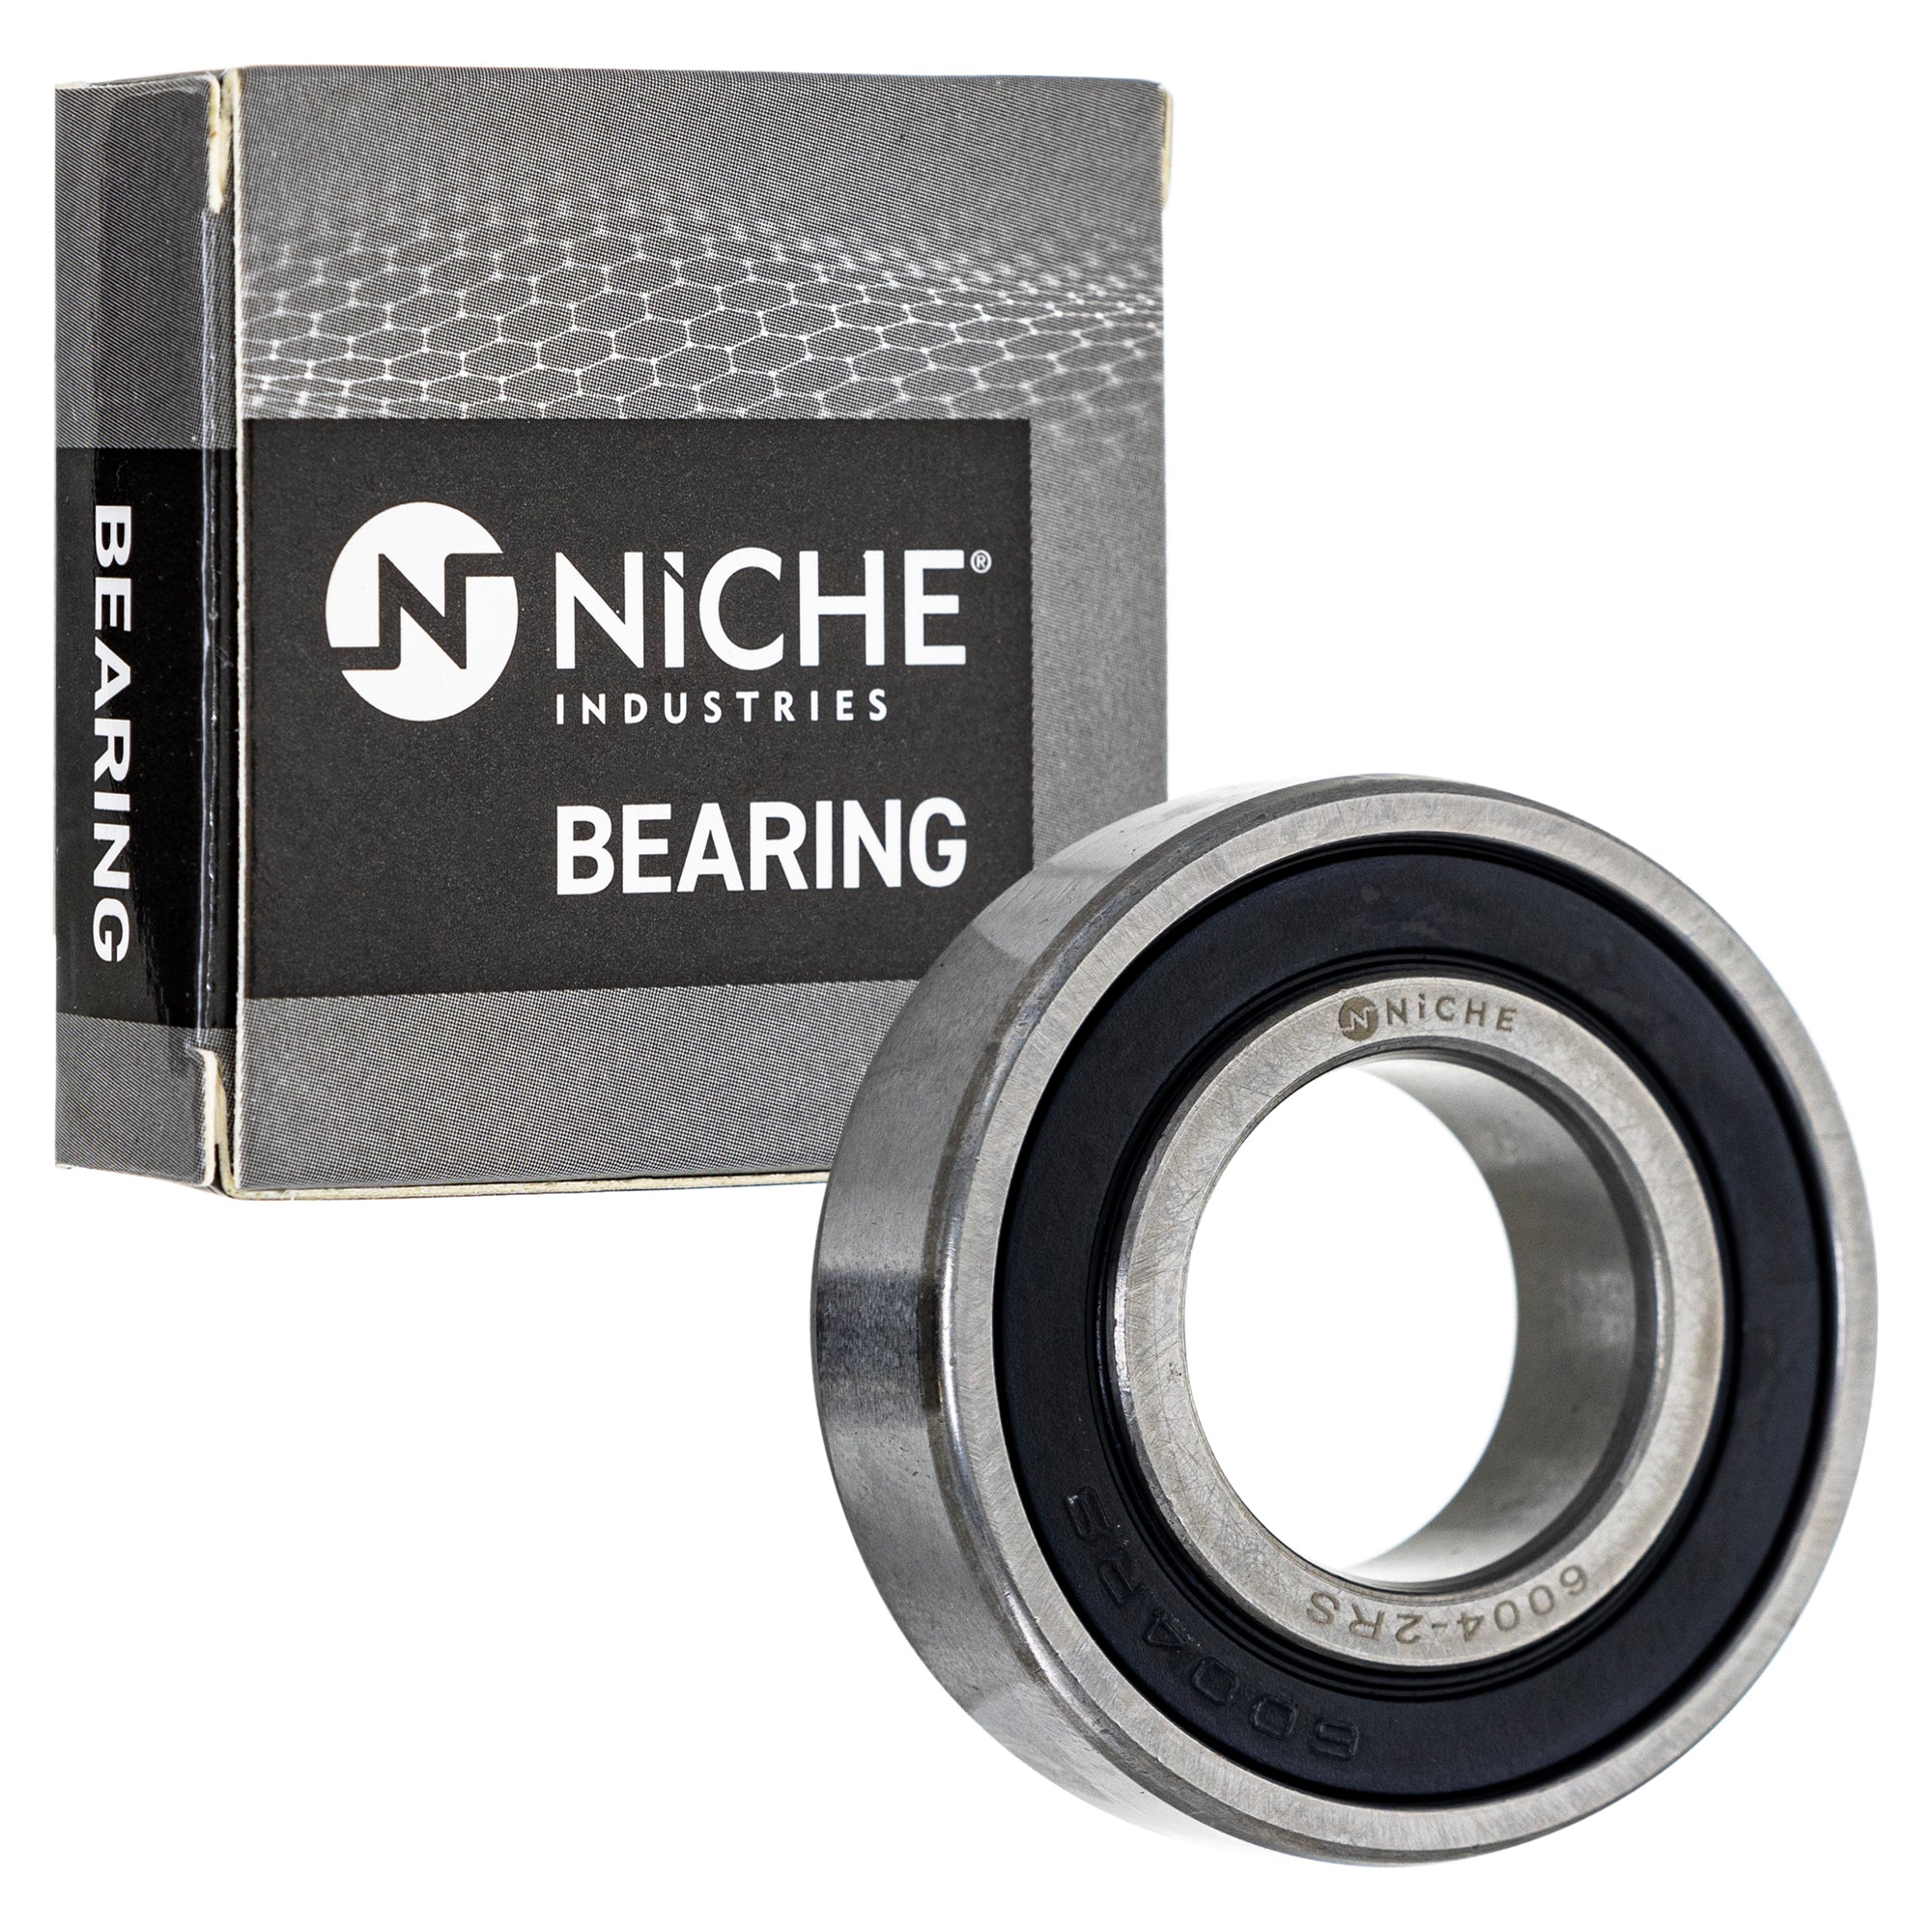 NICHE 519-CBB2225R Bearing & Seal Kit 2-Pack for zOTHER Toro Exmark